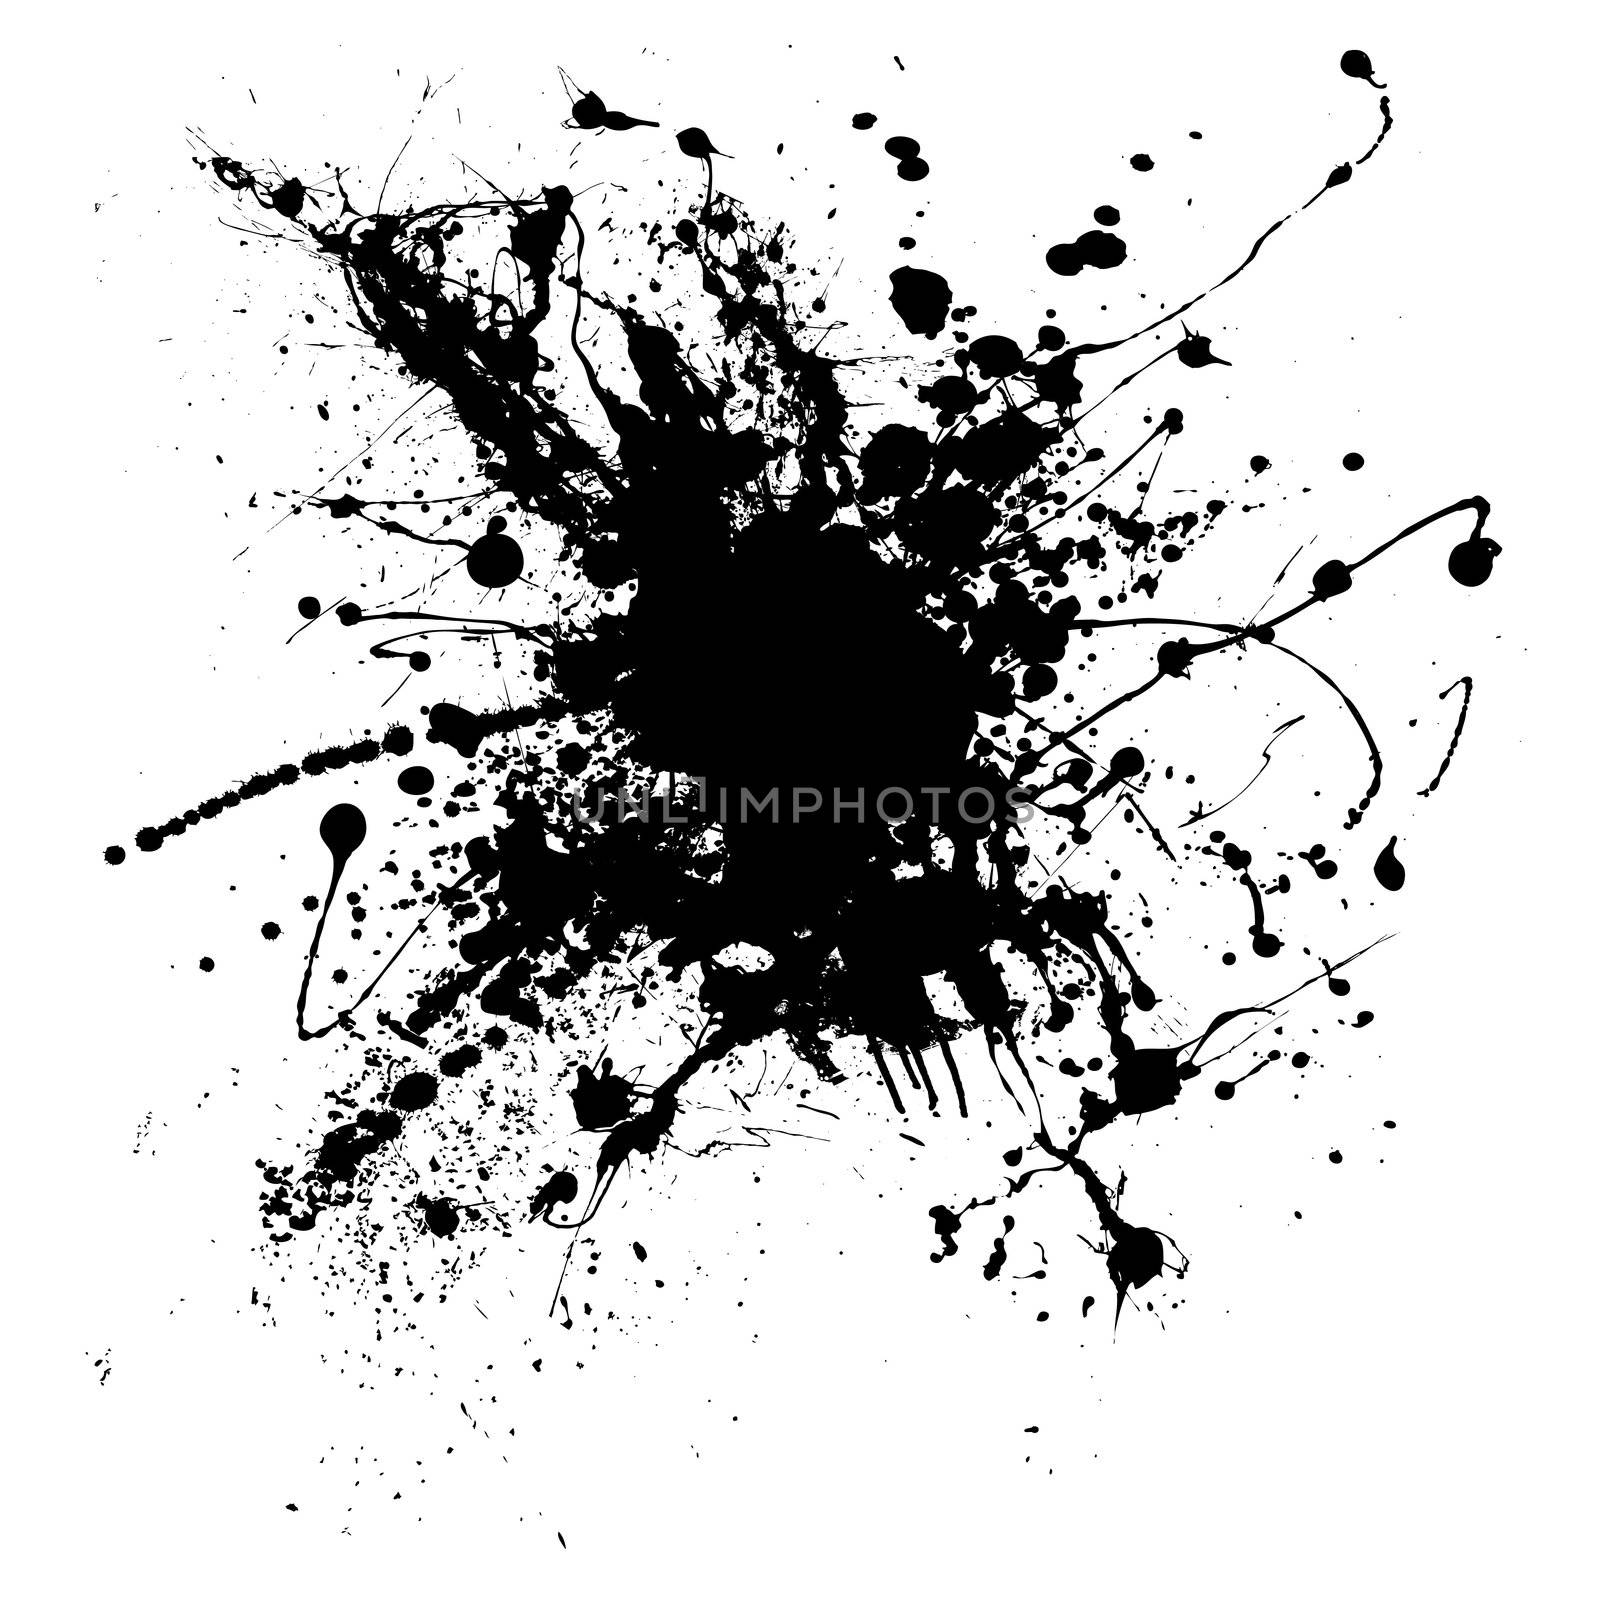 Random illustrated ink splat in black and white